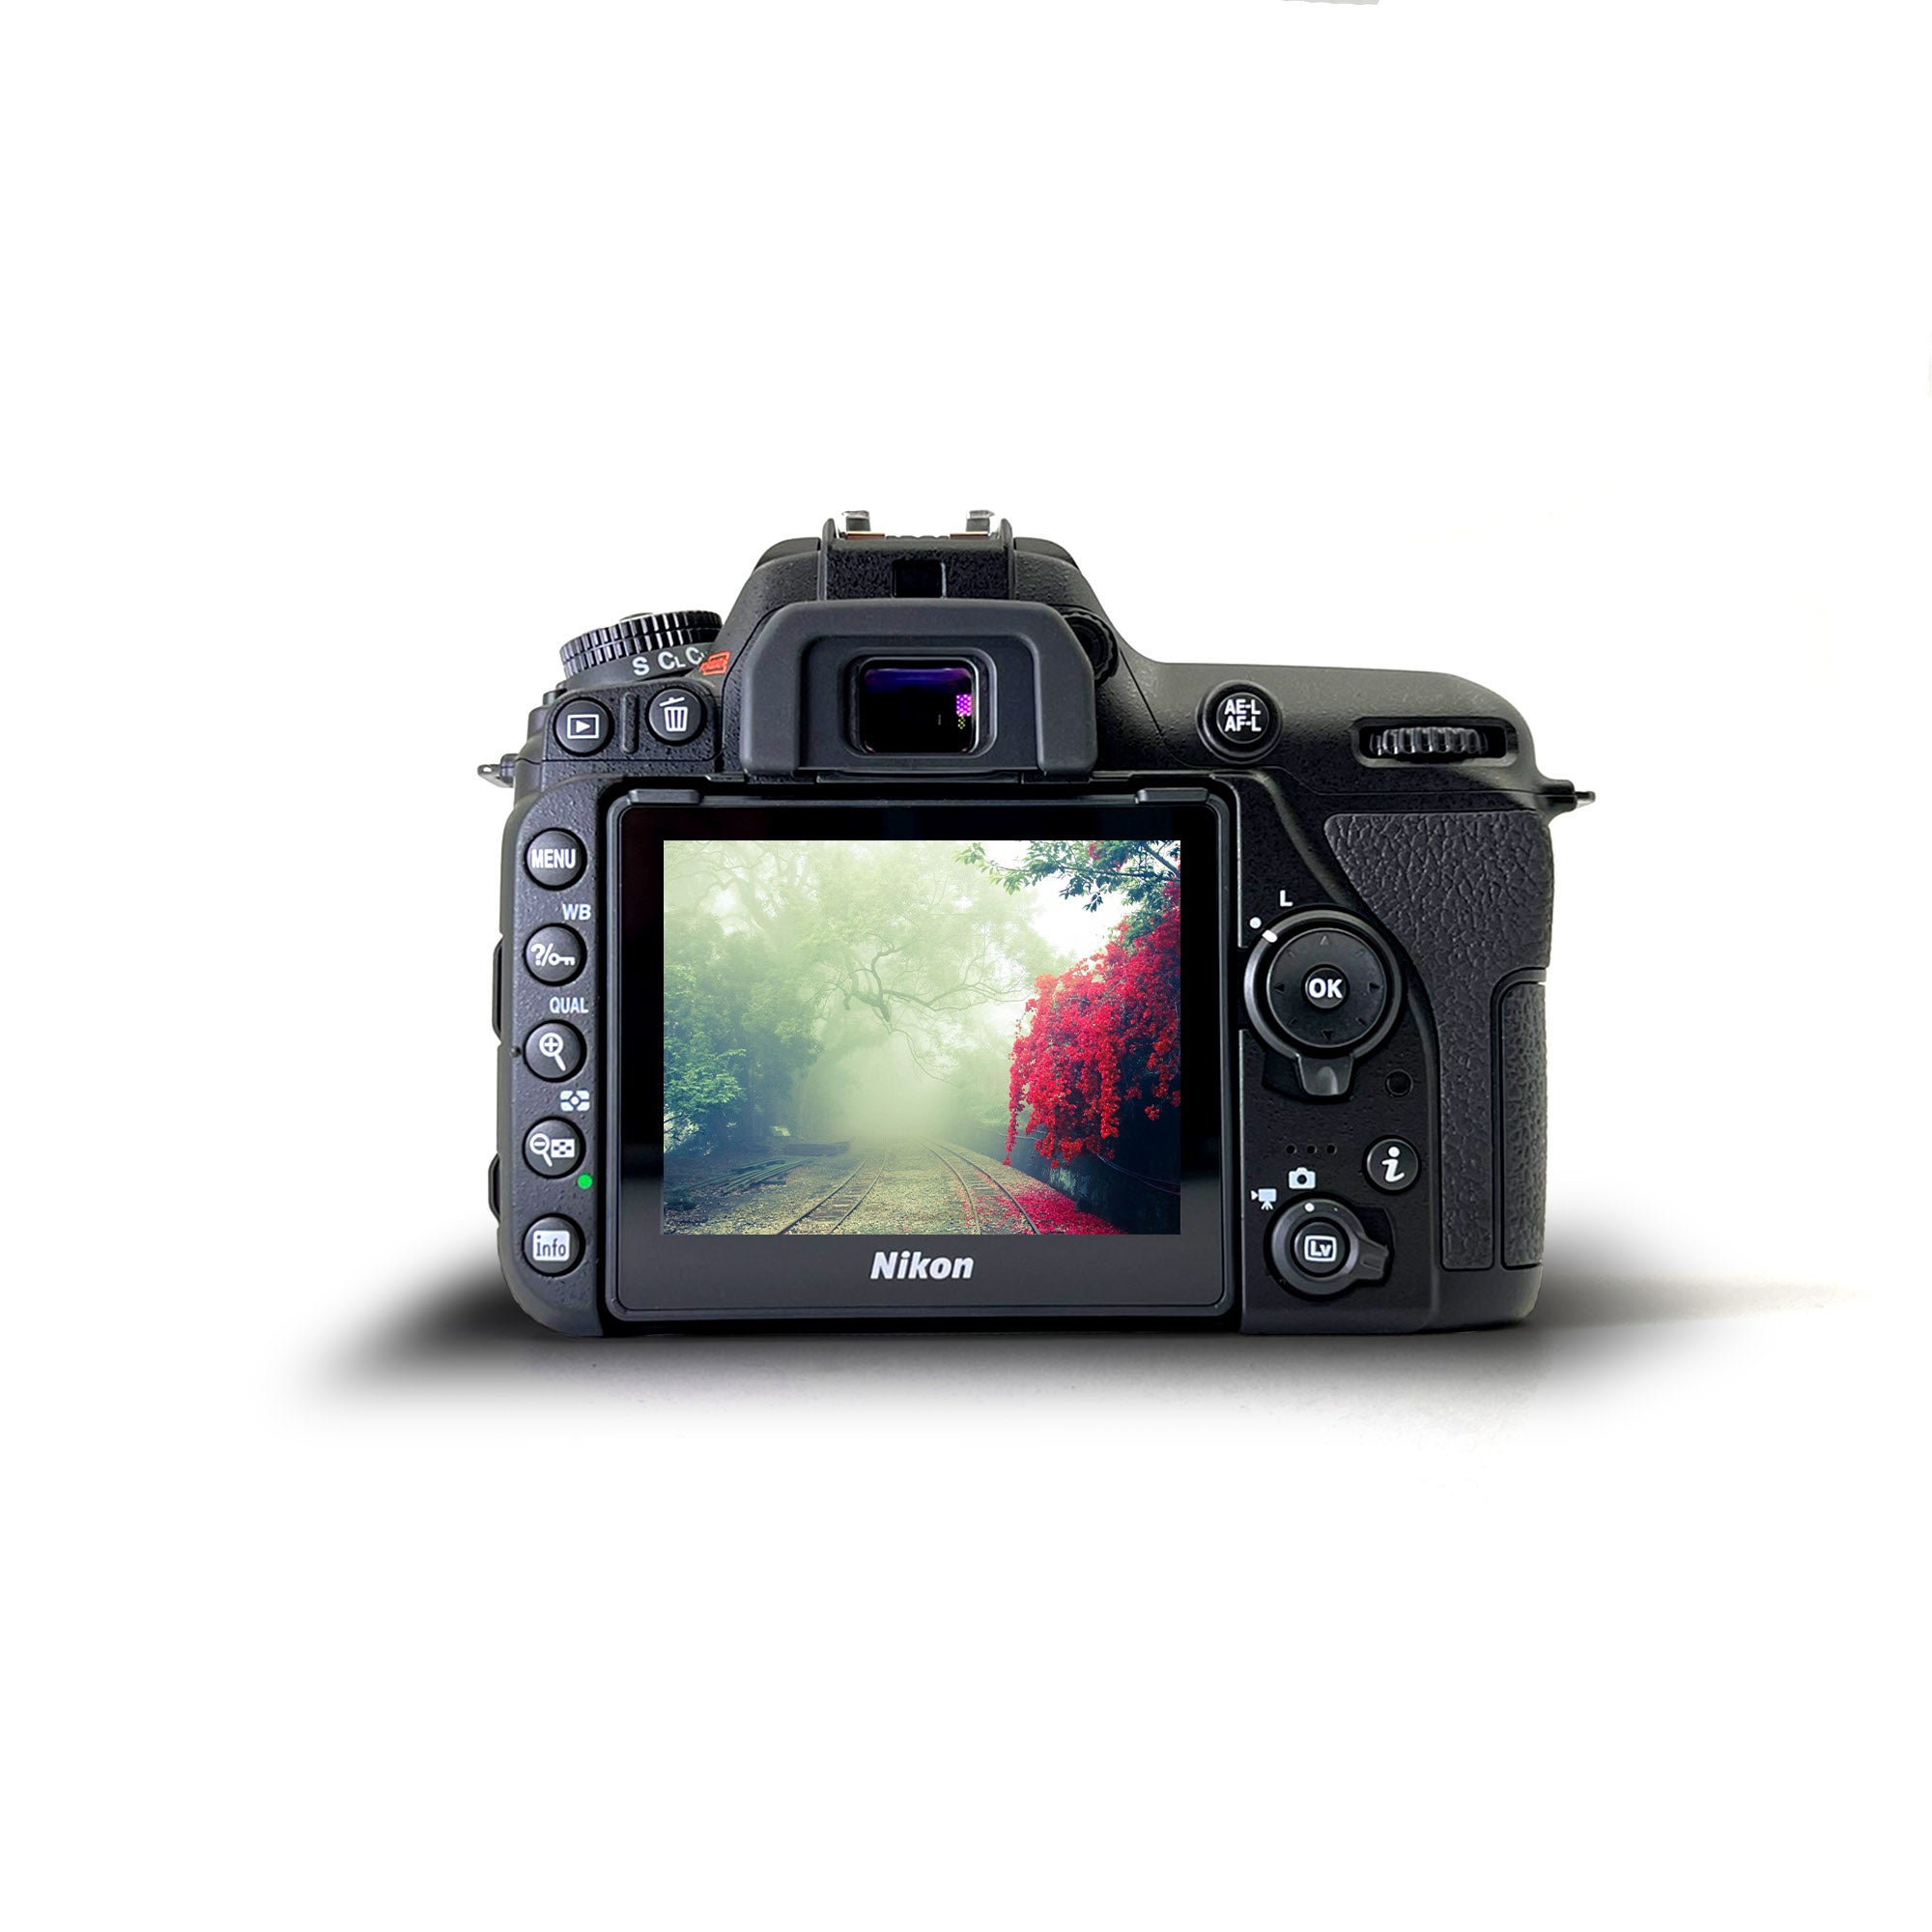 Nikon D7500 DSLR Camera(1582) with 18-140mm Lens+420-800mm f/8.3 HD  Telephoto Zoom Lens+Case+128 GIG Memory+Flash+Monopod(13PC)Bundle